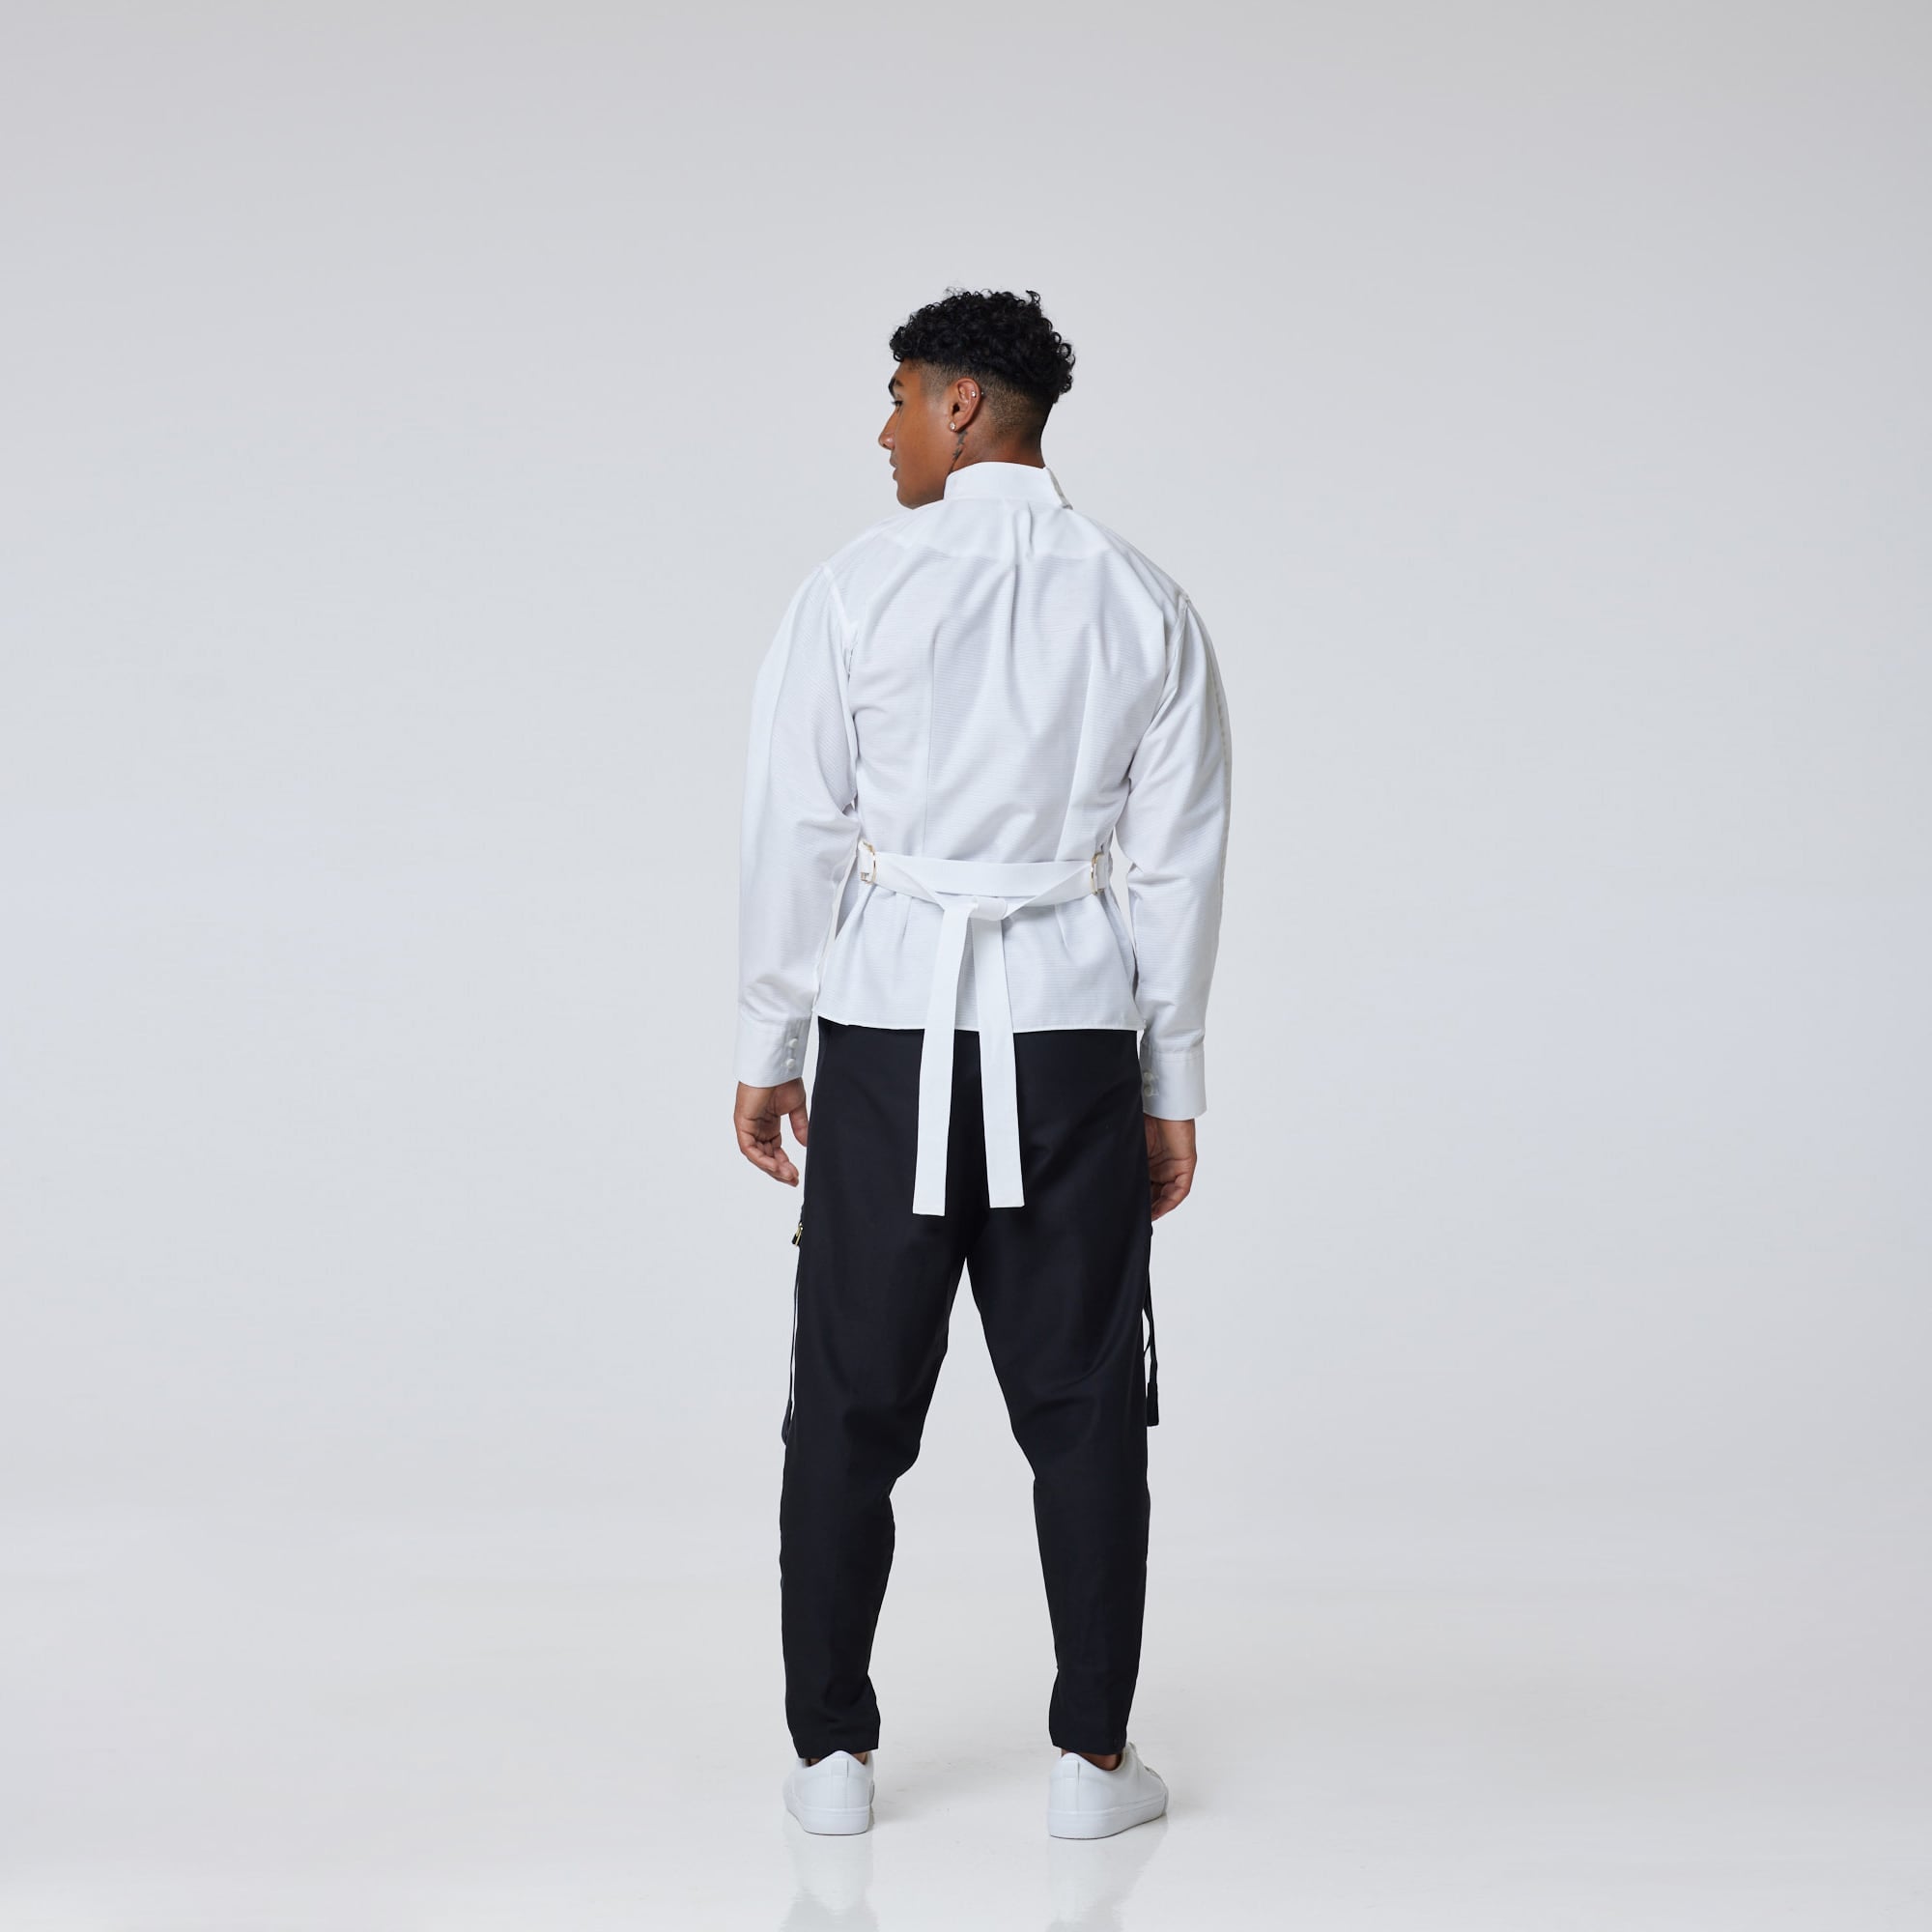 ZERØ London - Back view, mens luxury white dress shirt, zero waste fashion, designed & made in London